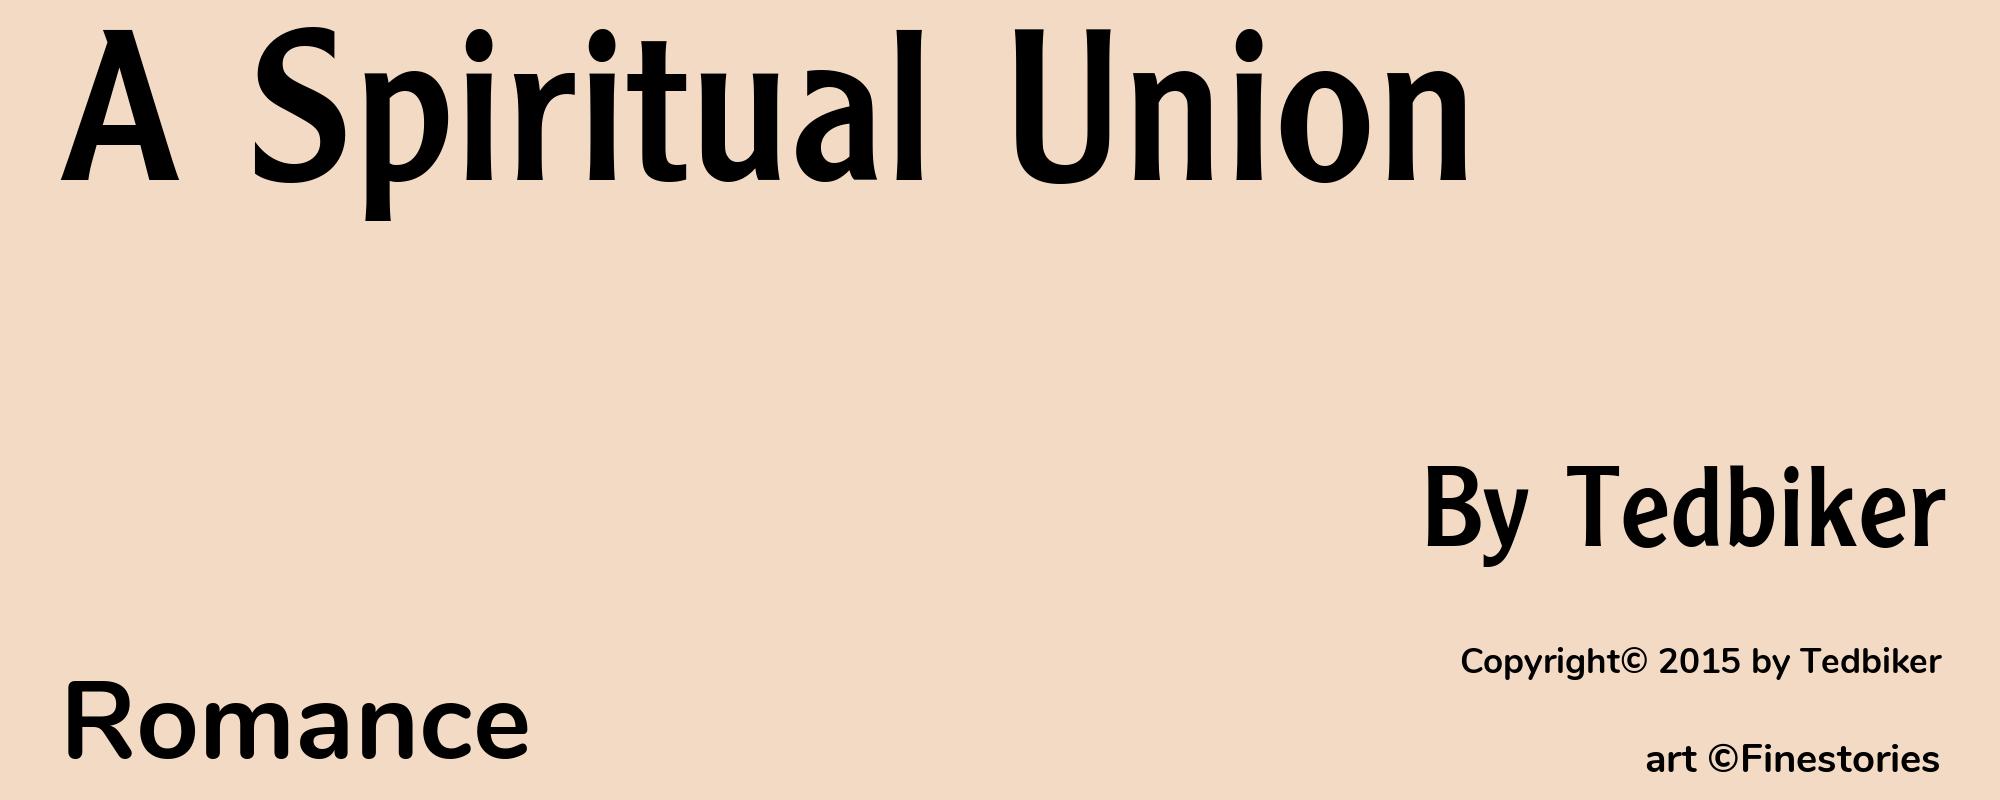 A Spiritual Union - Cover